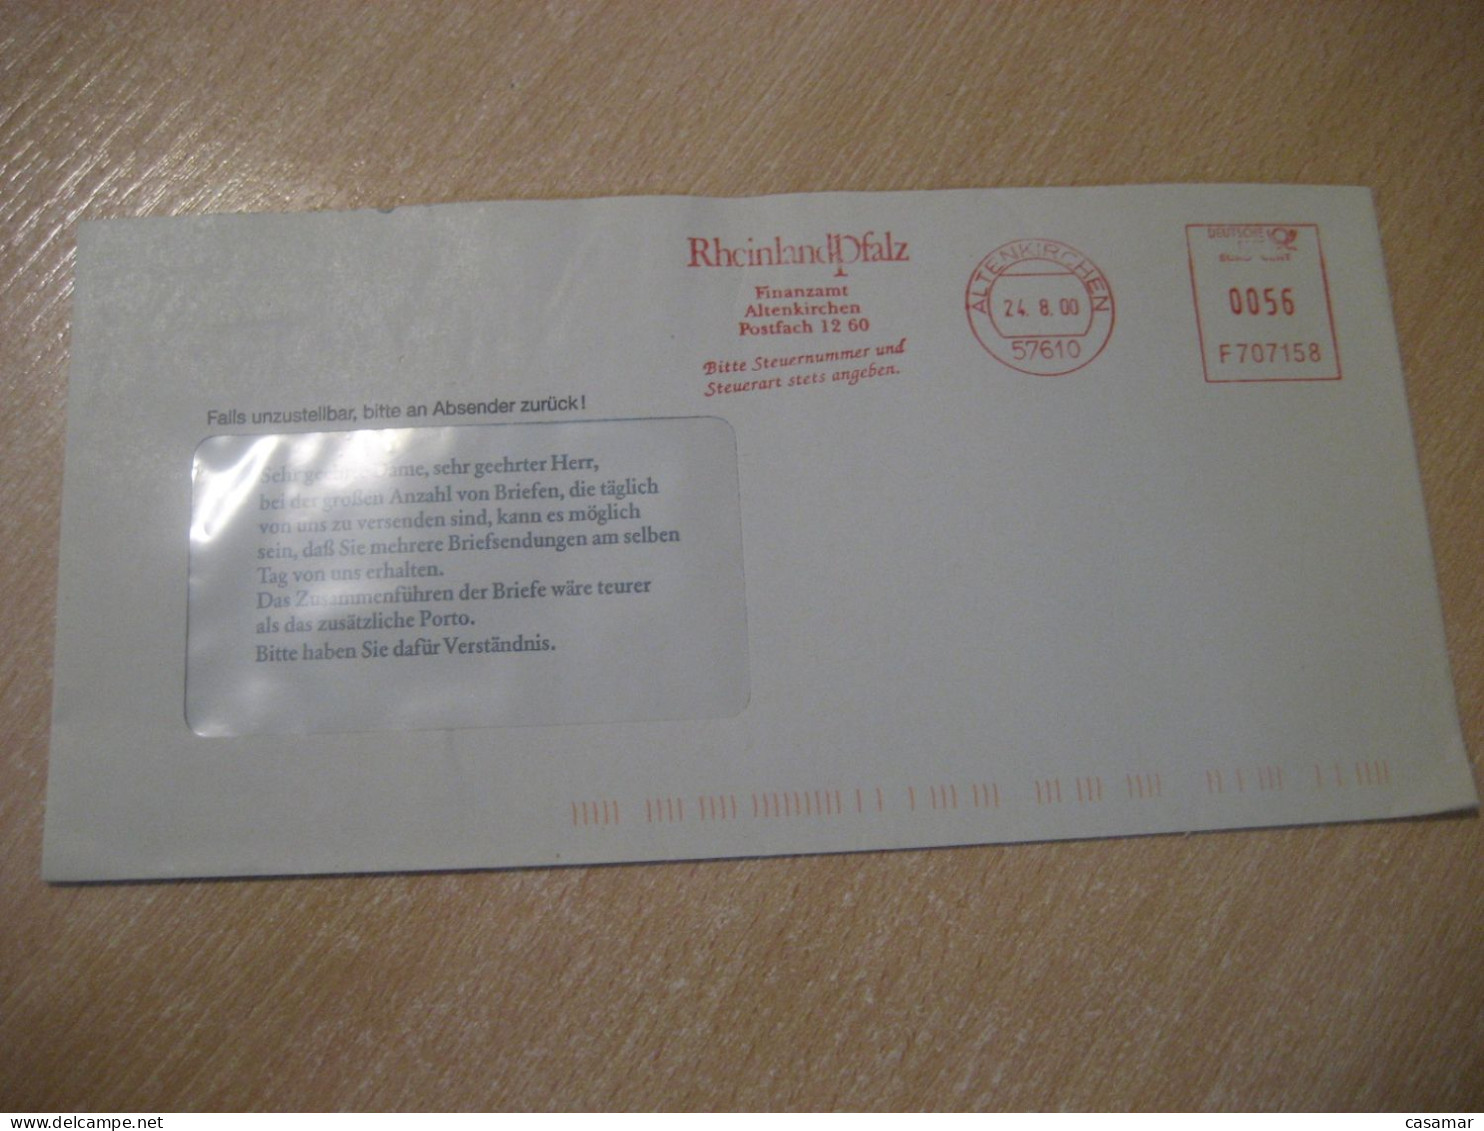 ALTENKIRCHEN 2000 Rheinlandpfalz Meter Mail Cancel Cover GERMANY - Covers & Documents